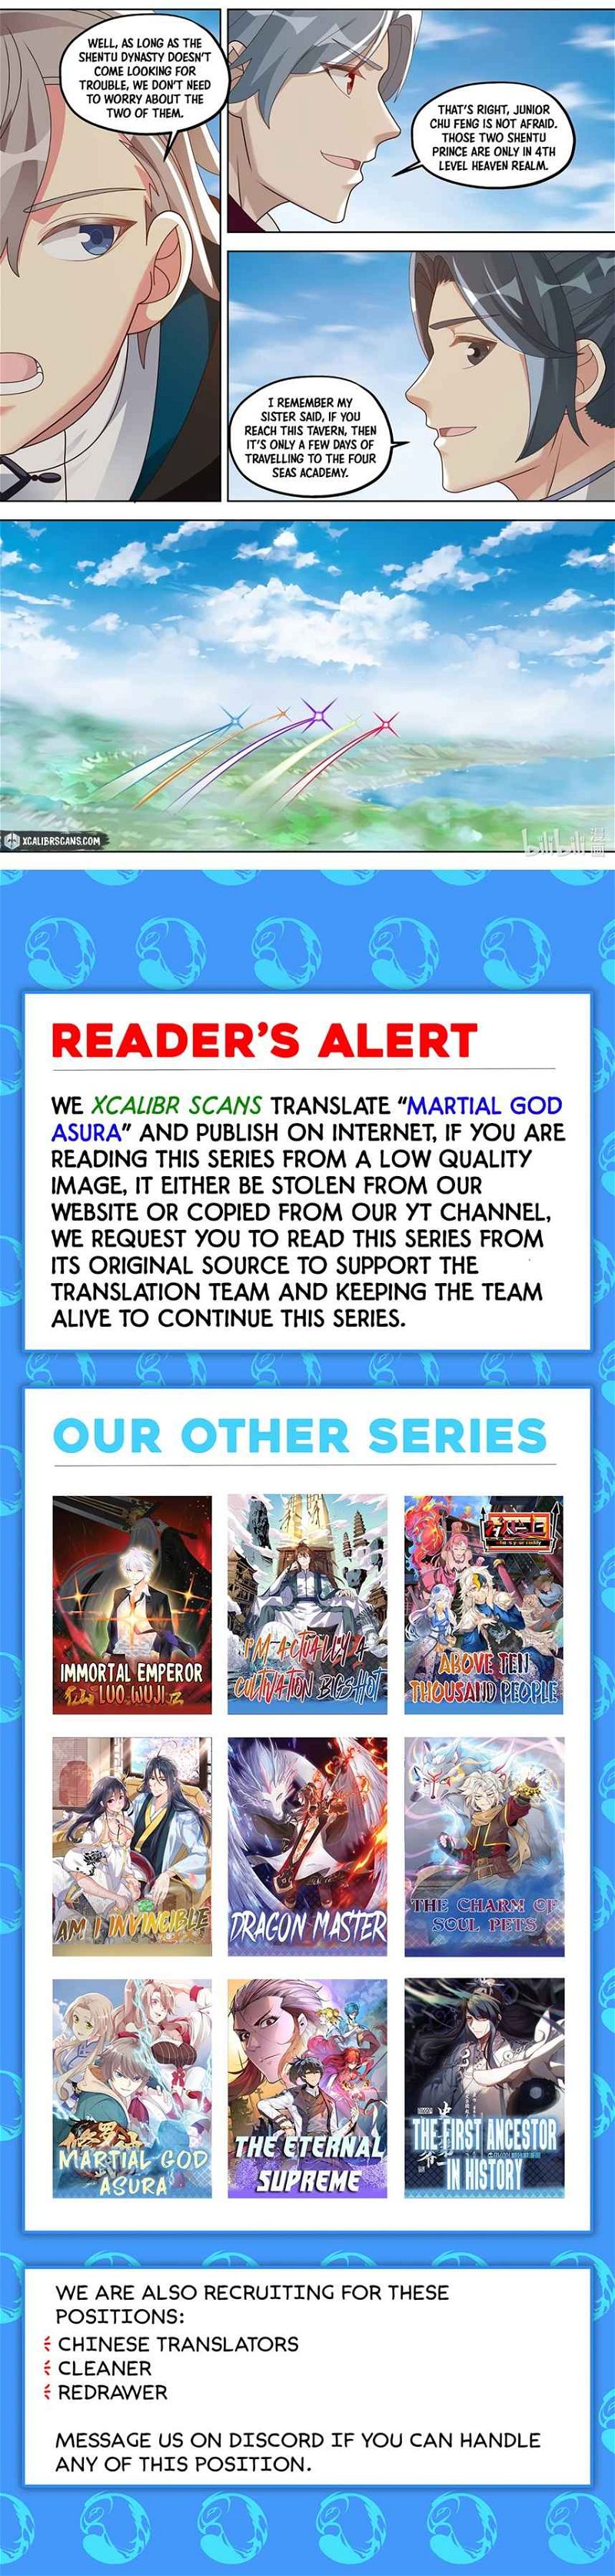 Martial God Asura Chapter 416 page 5